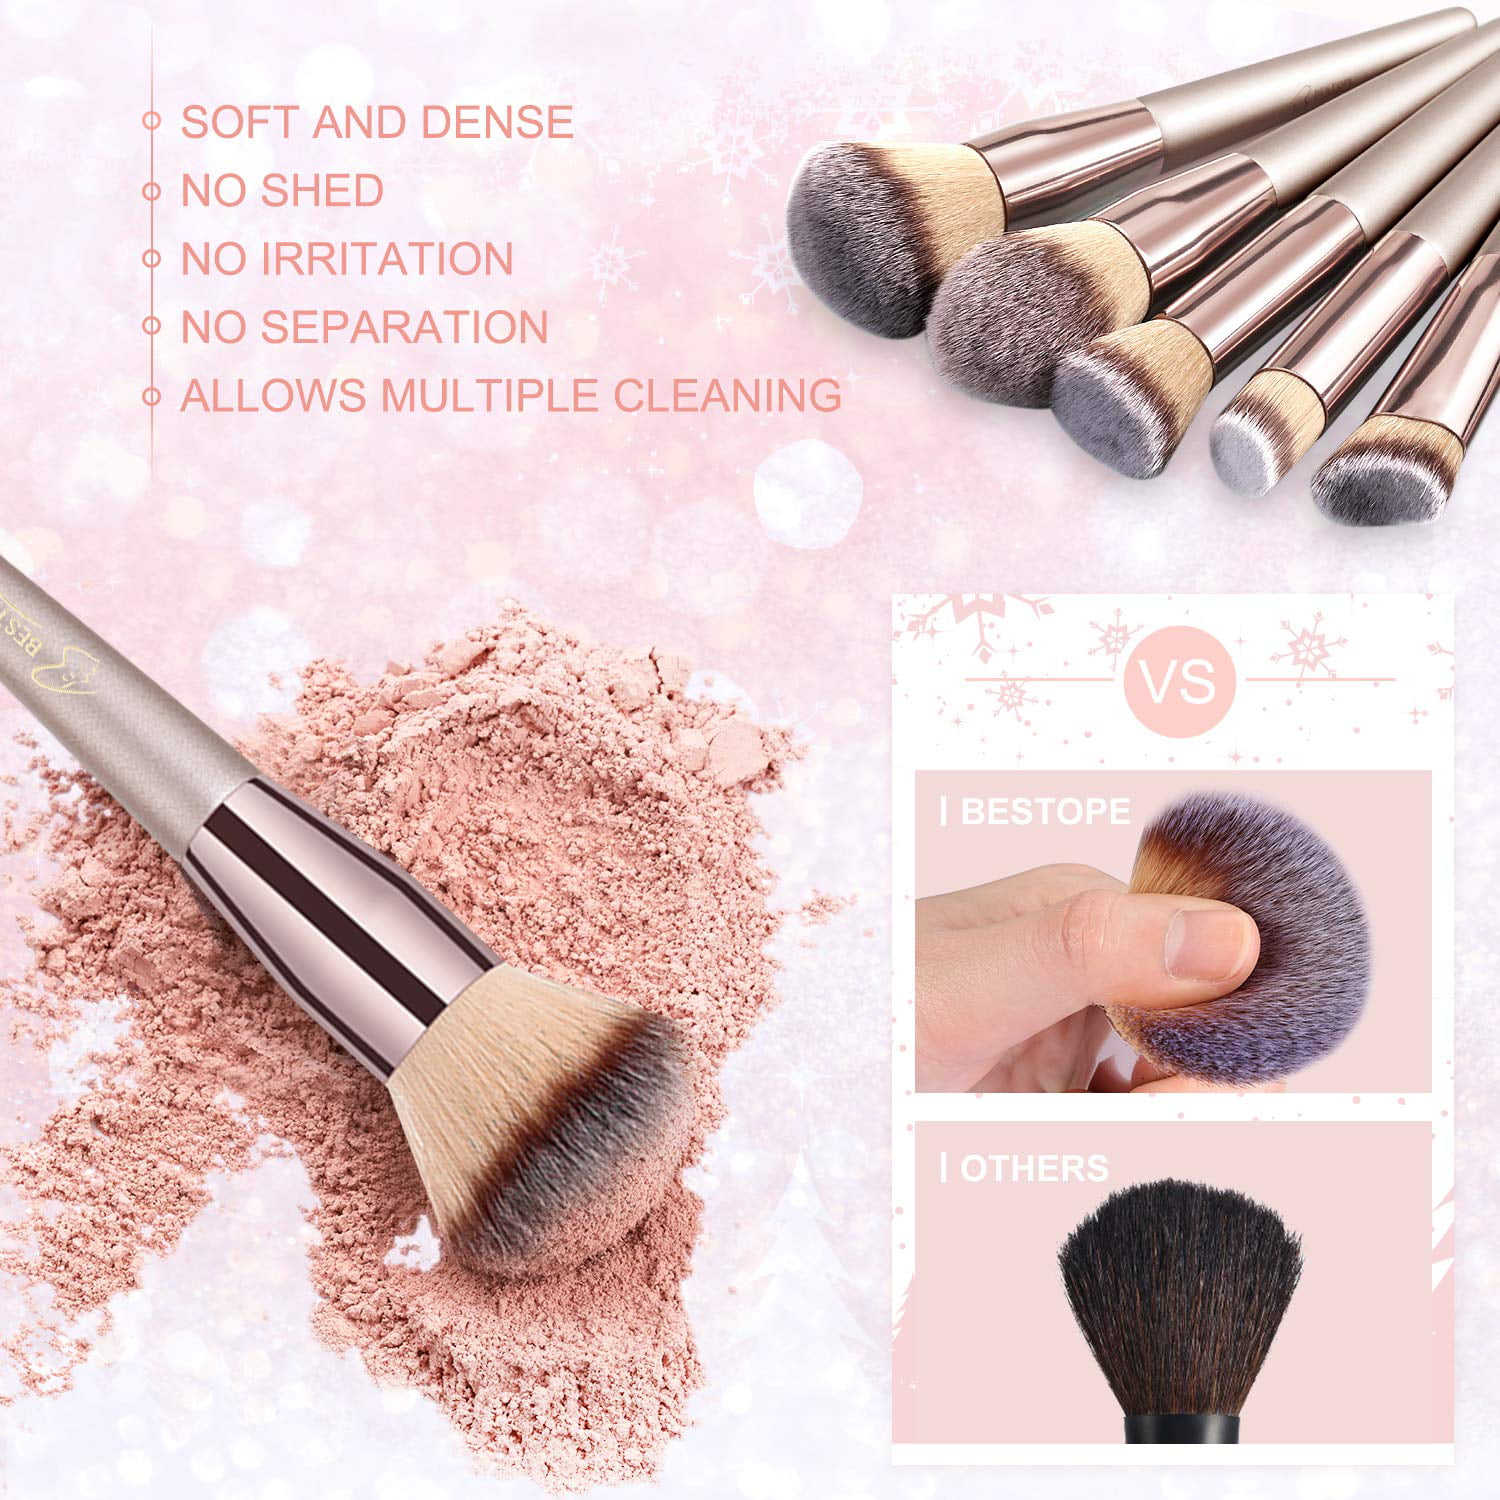 Ustar Makeup Brushes Kit 16pcs Makeup Brush Set Premium Synthetic Concealers Foundation Brush Blending Face Powder Blush Eyeshadow Brush Make Up